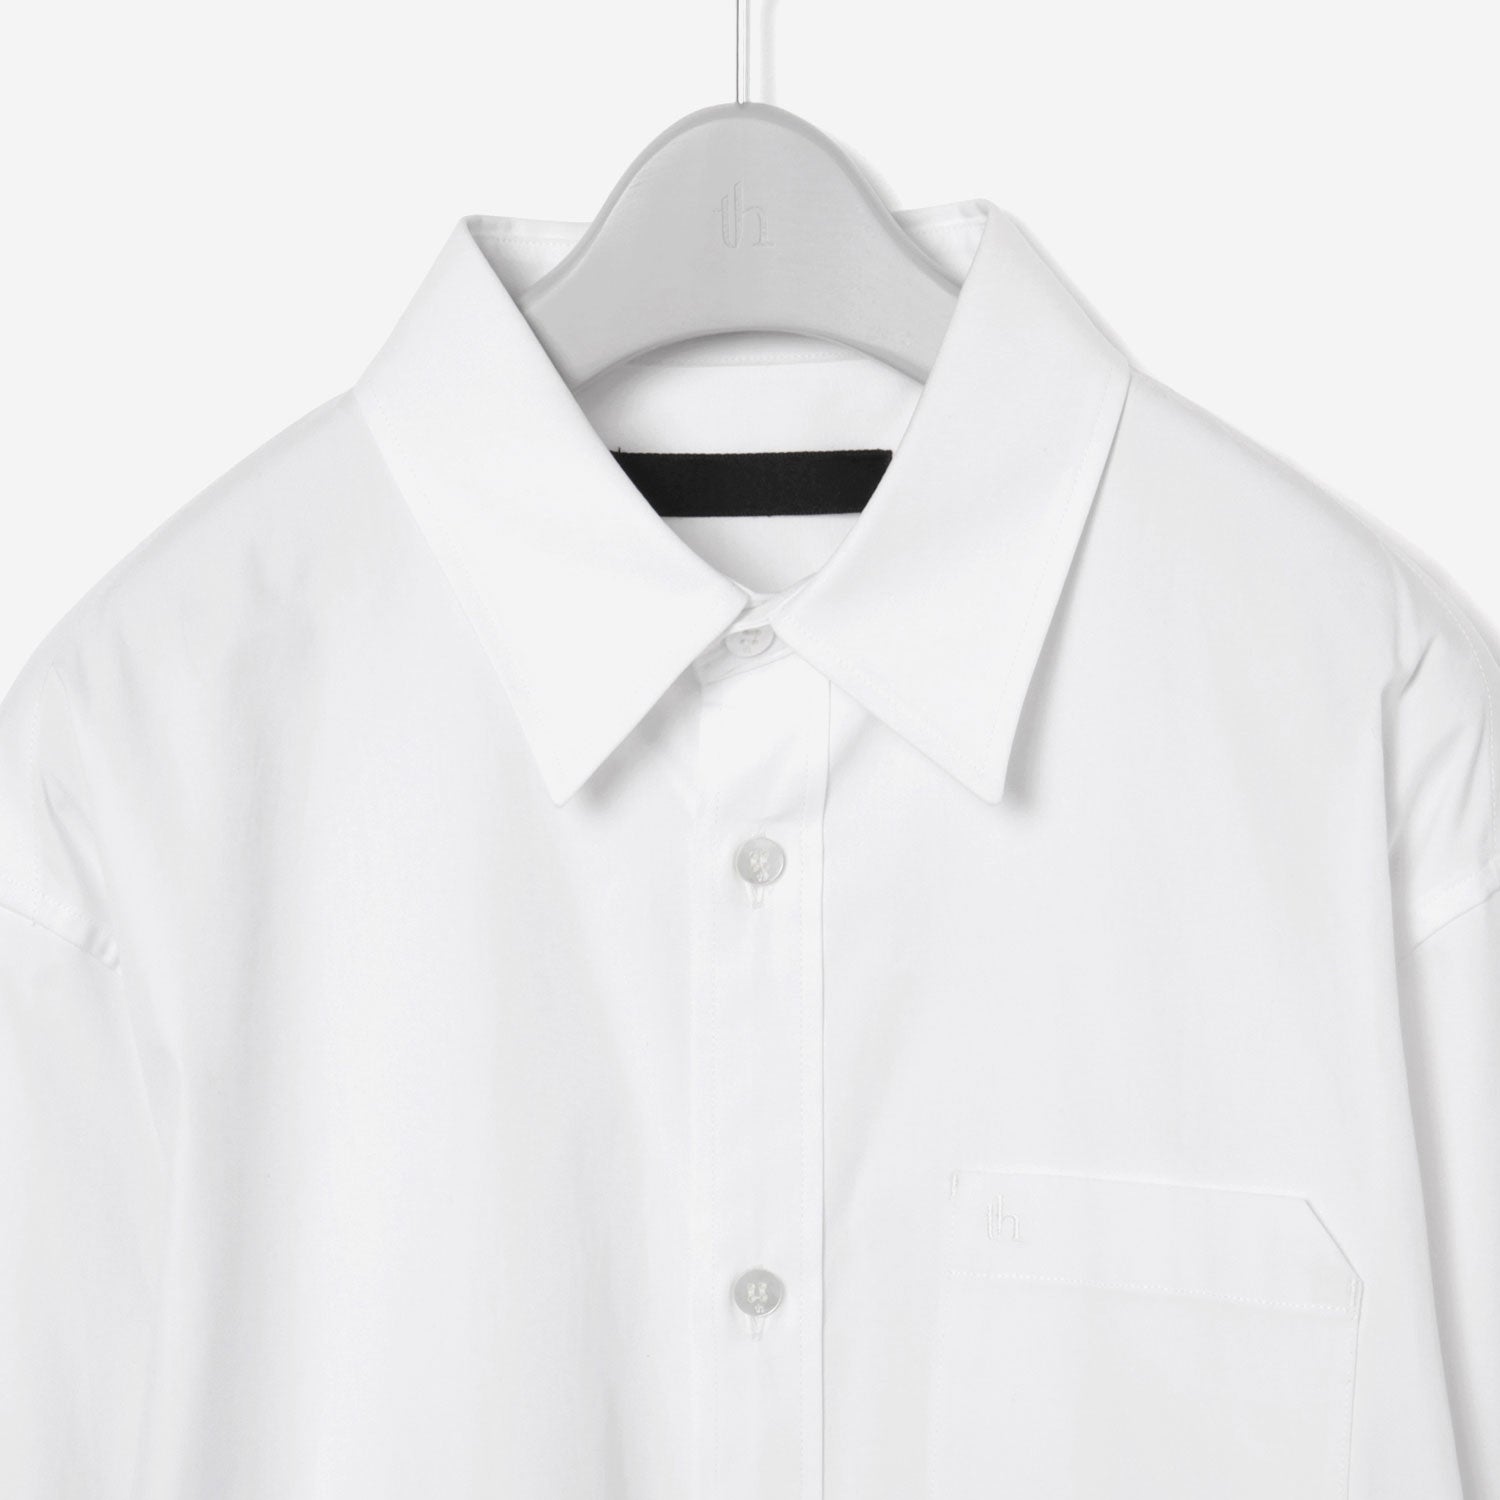 Regular collar Shirt / white